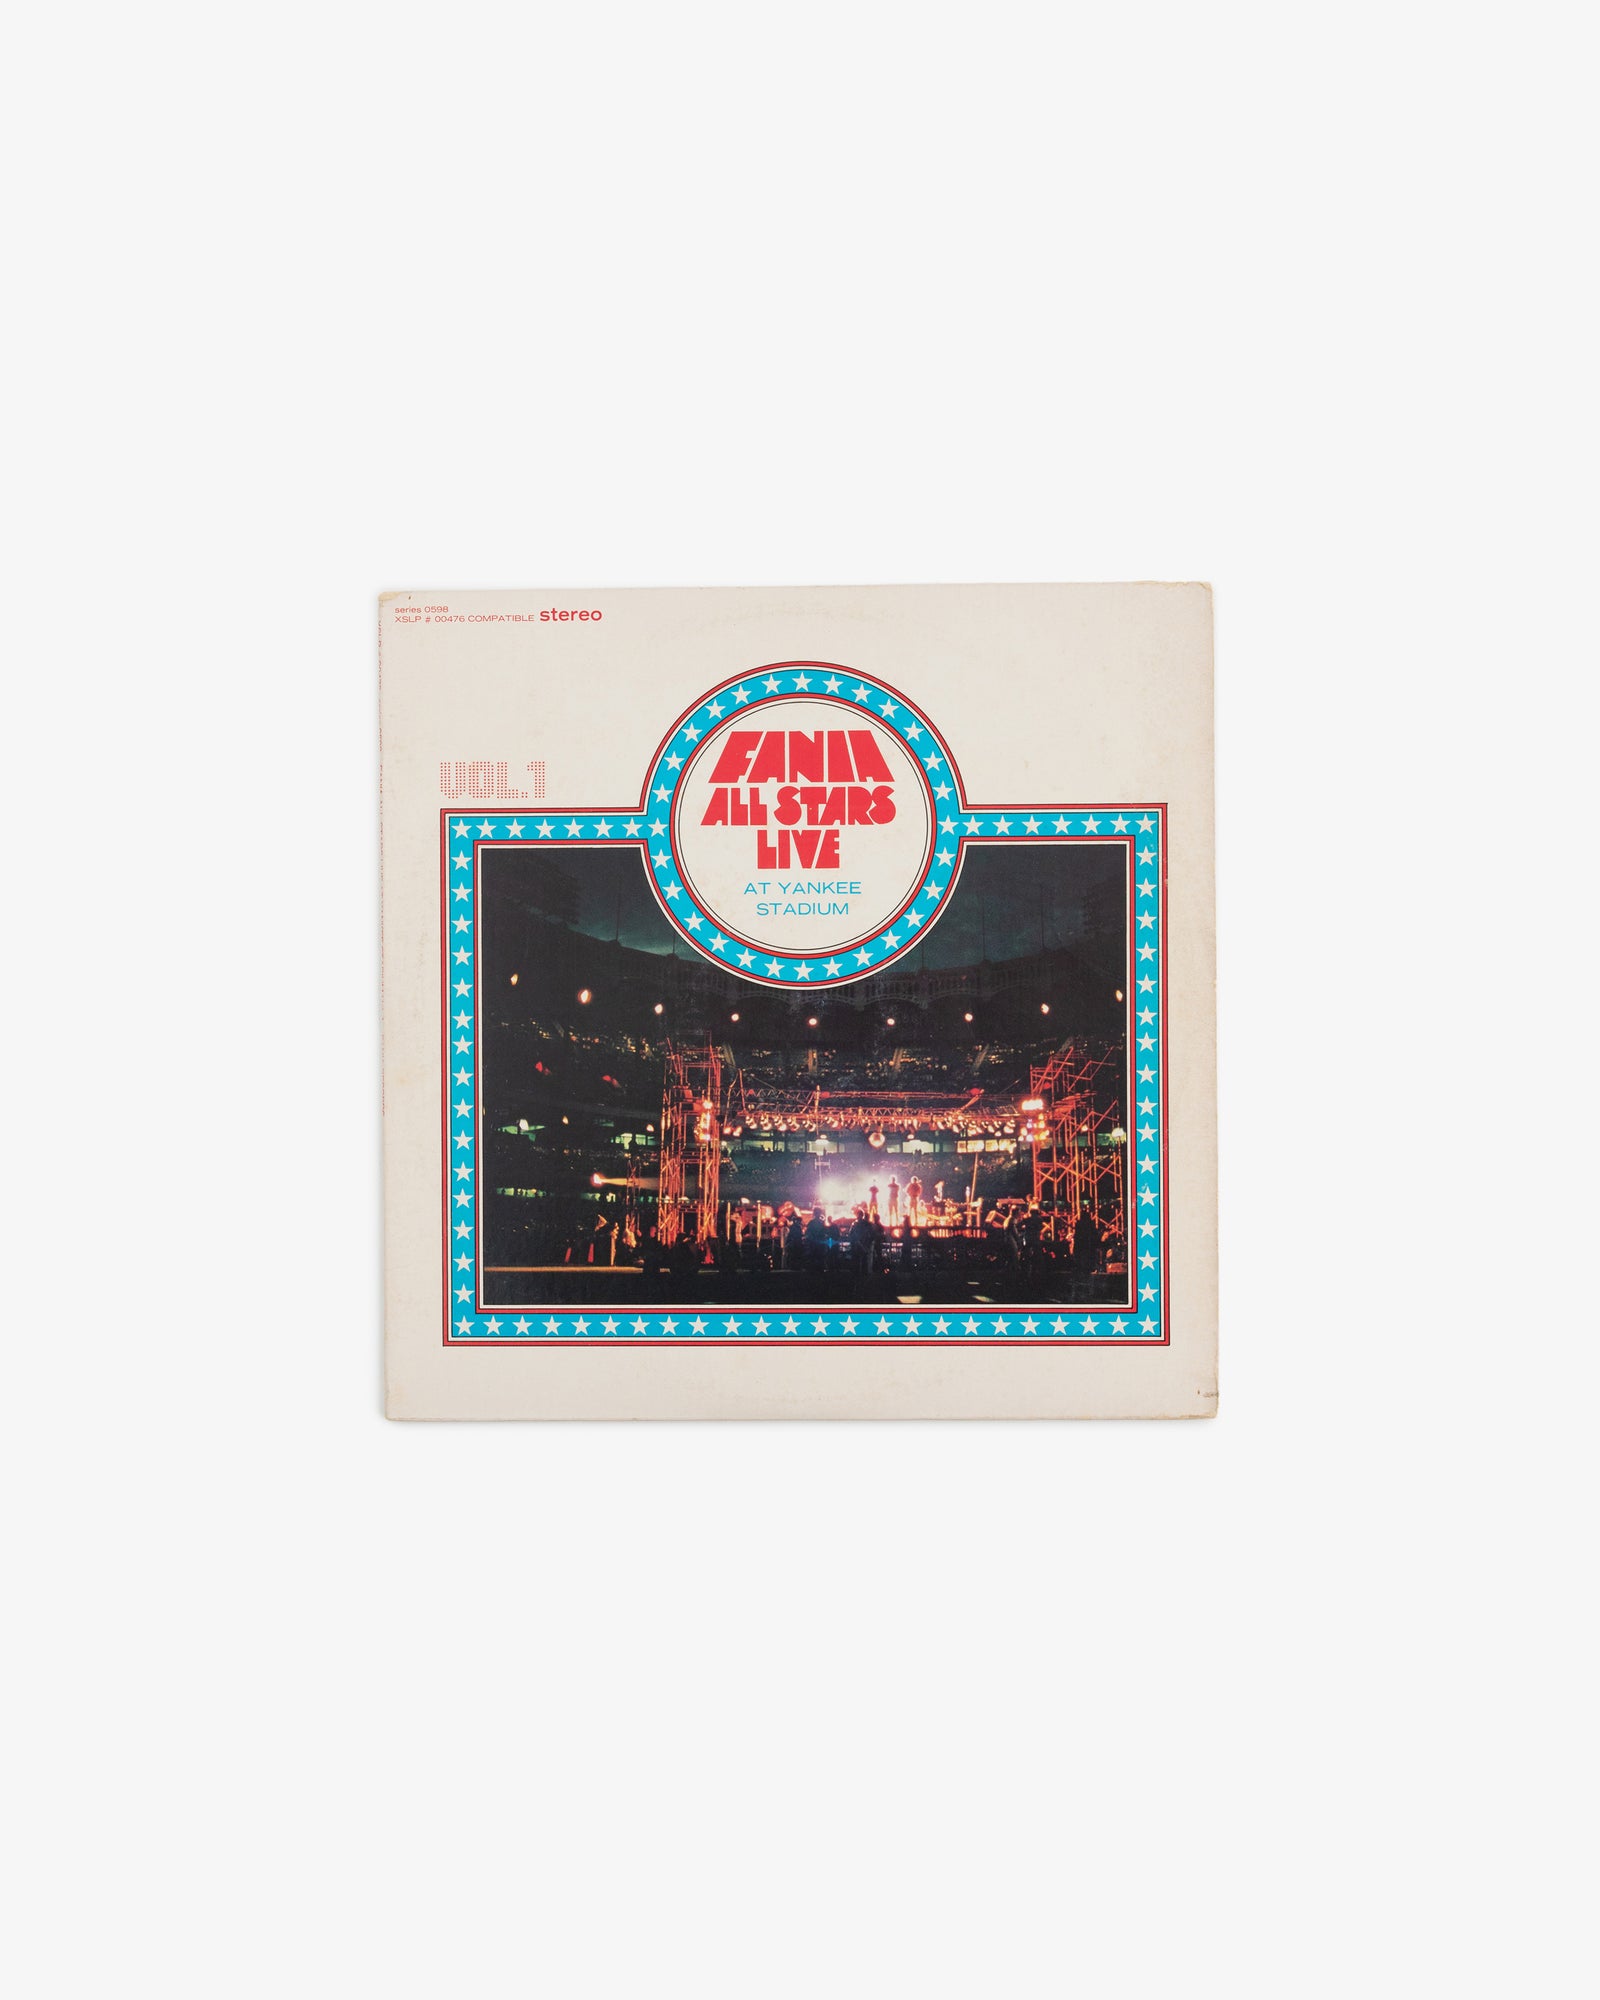 Fania All Stars – Live at Yankee Stadium LP